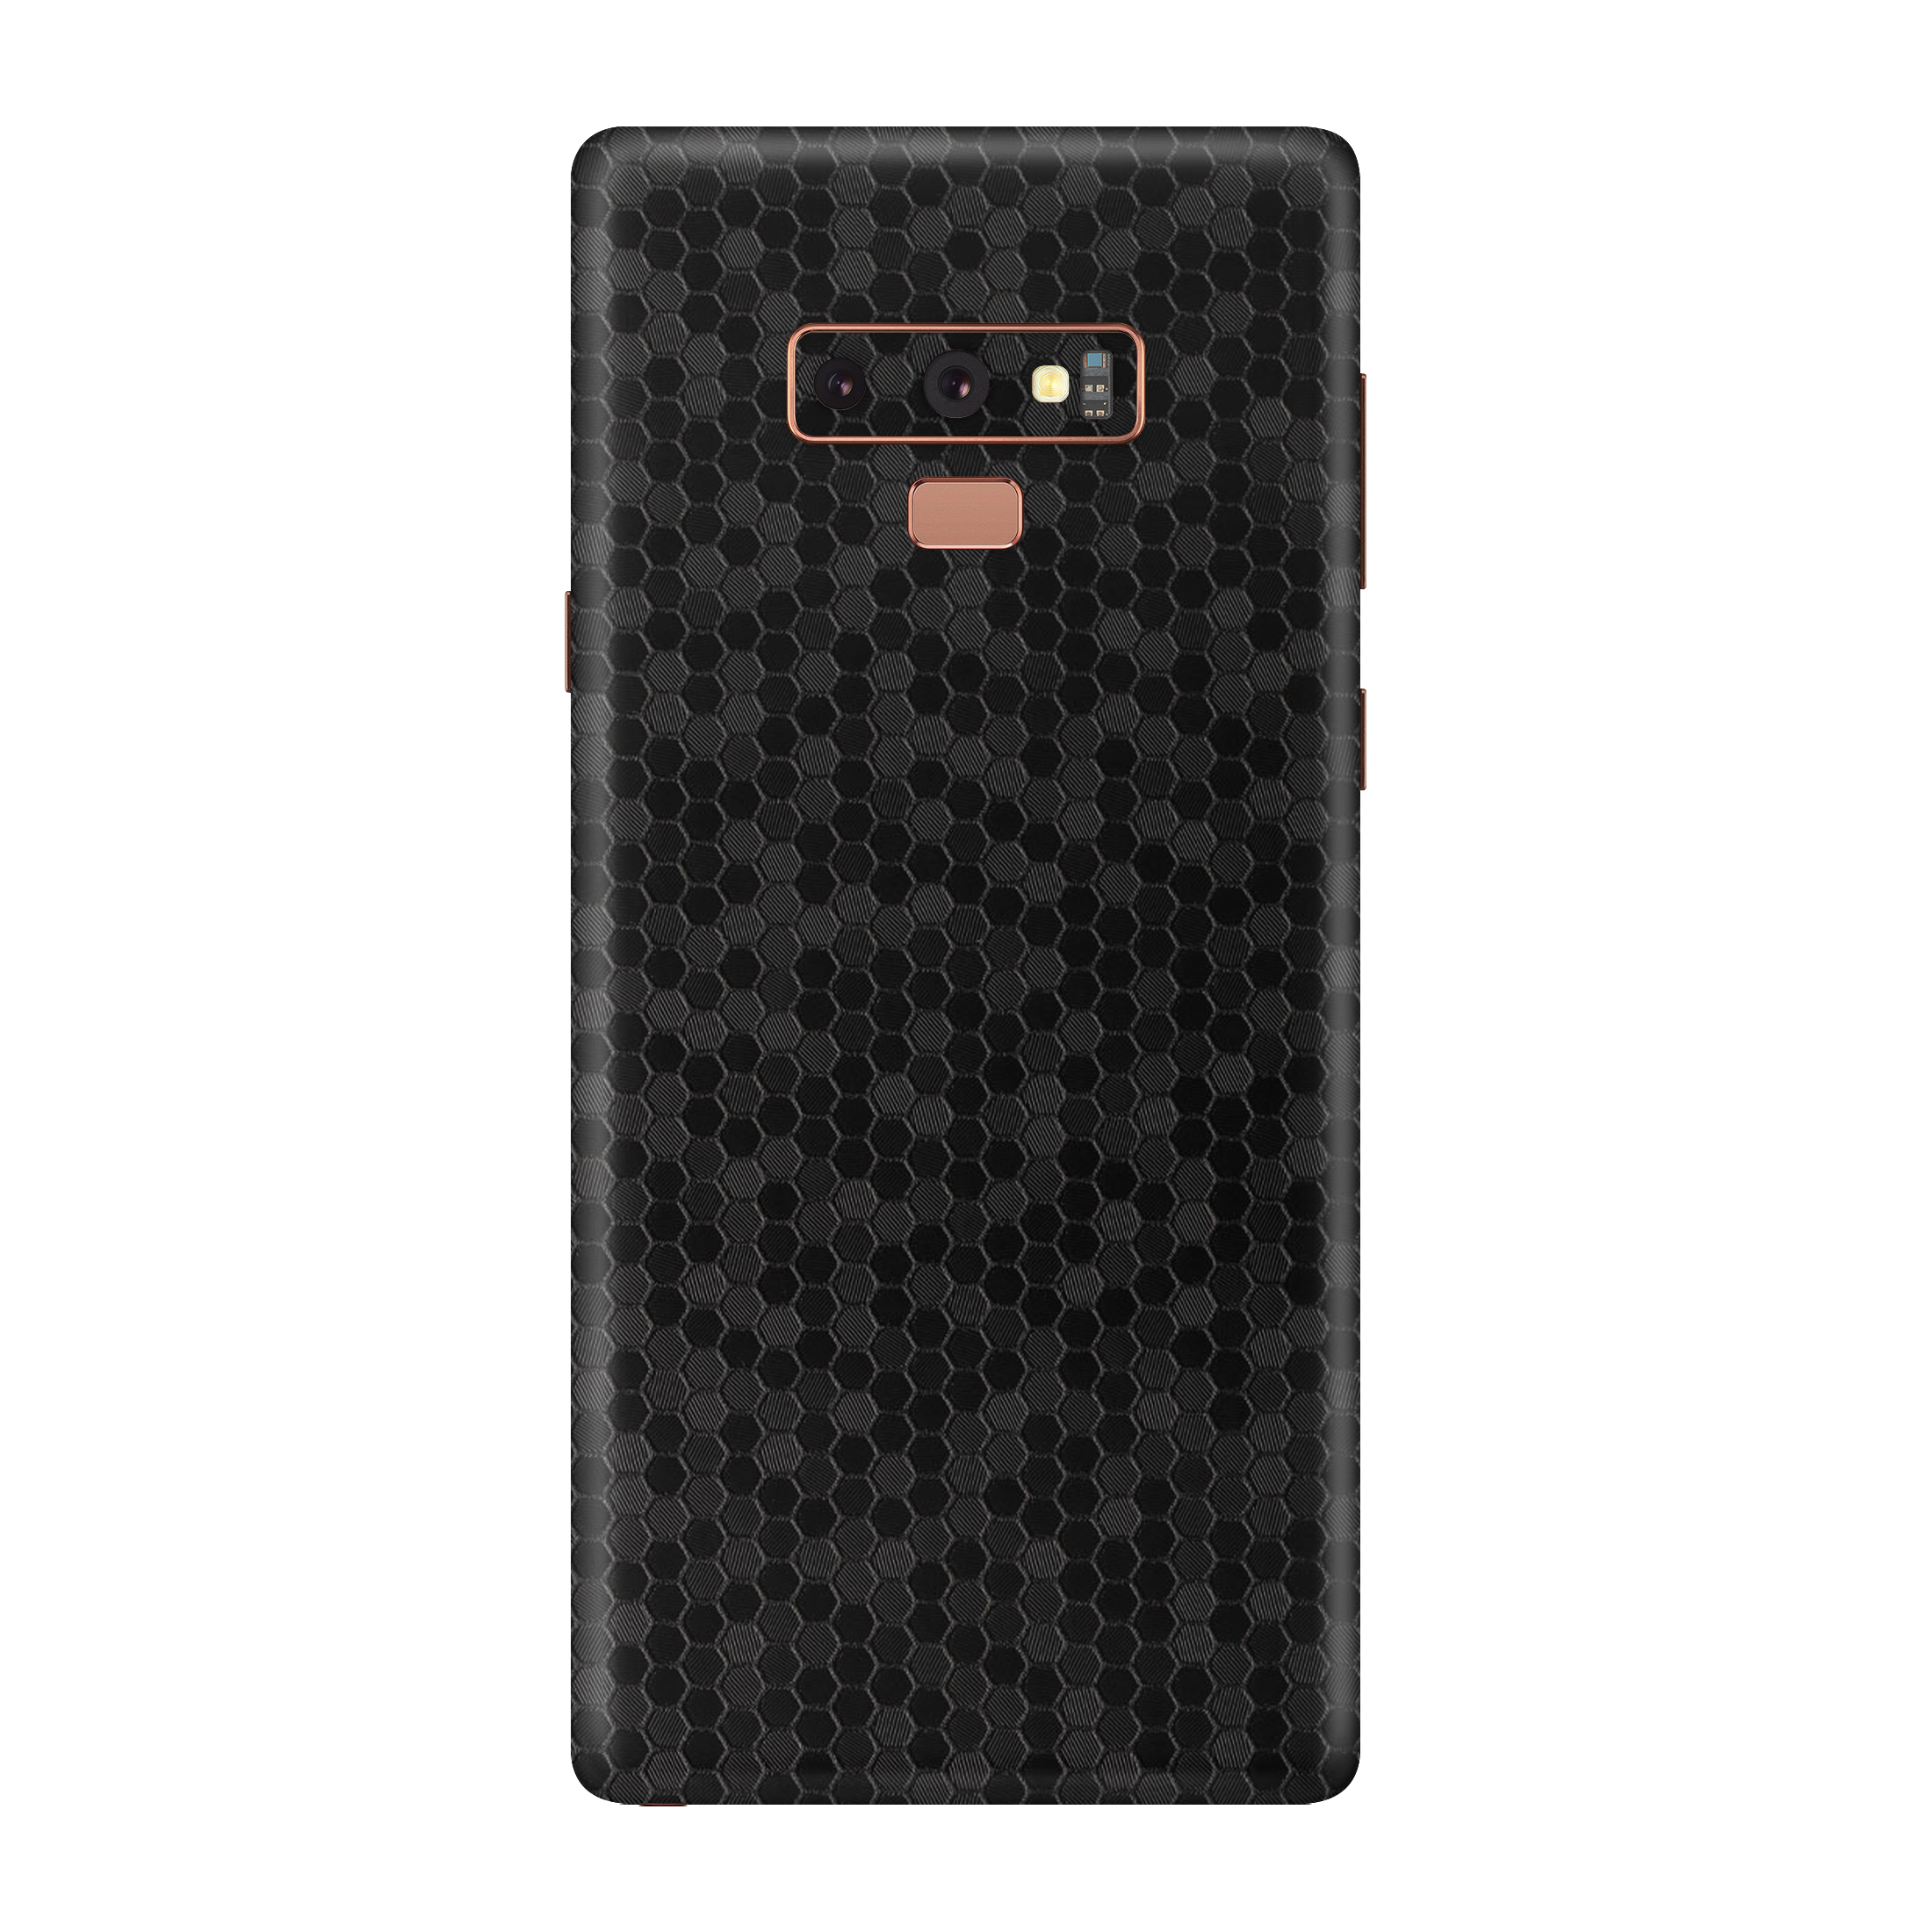 Honeycomb Black Skin for Samsung Note 9